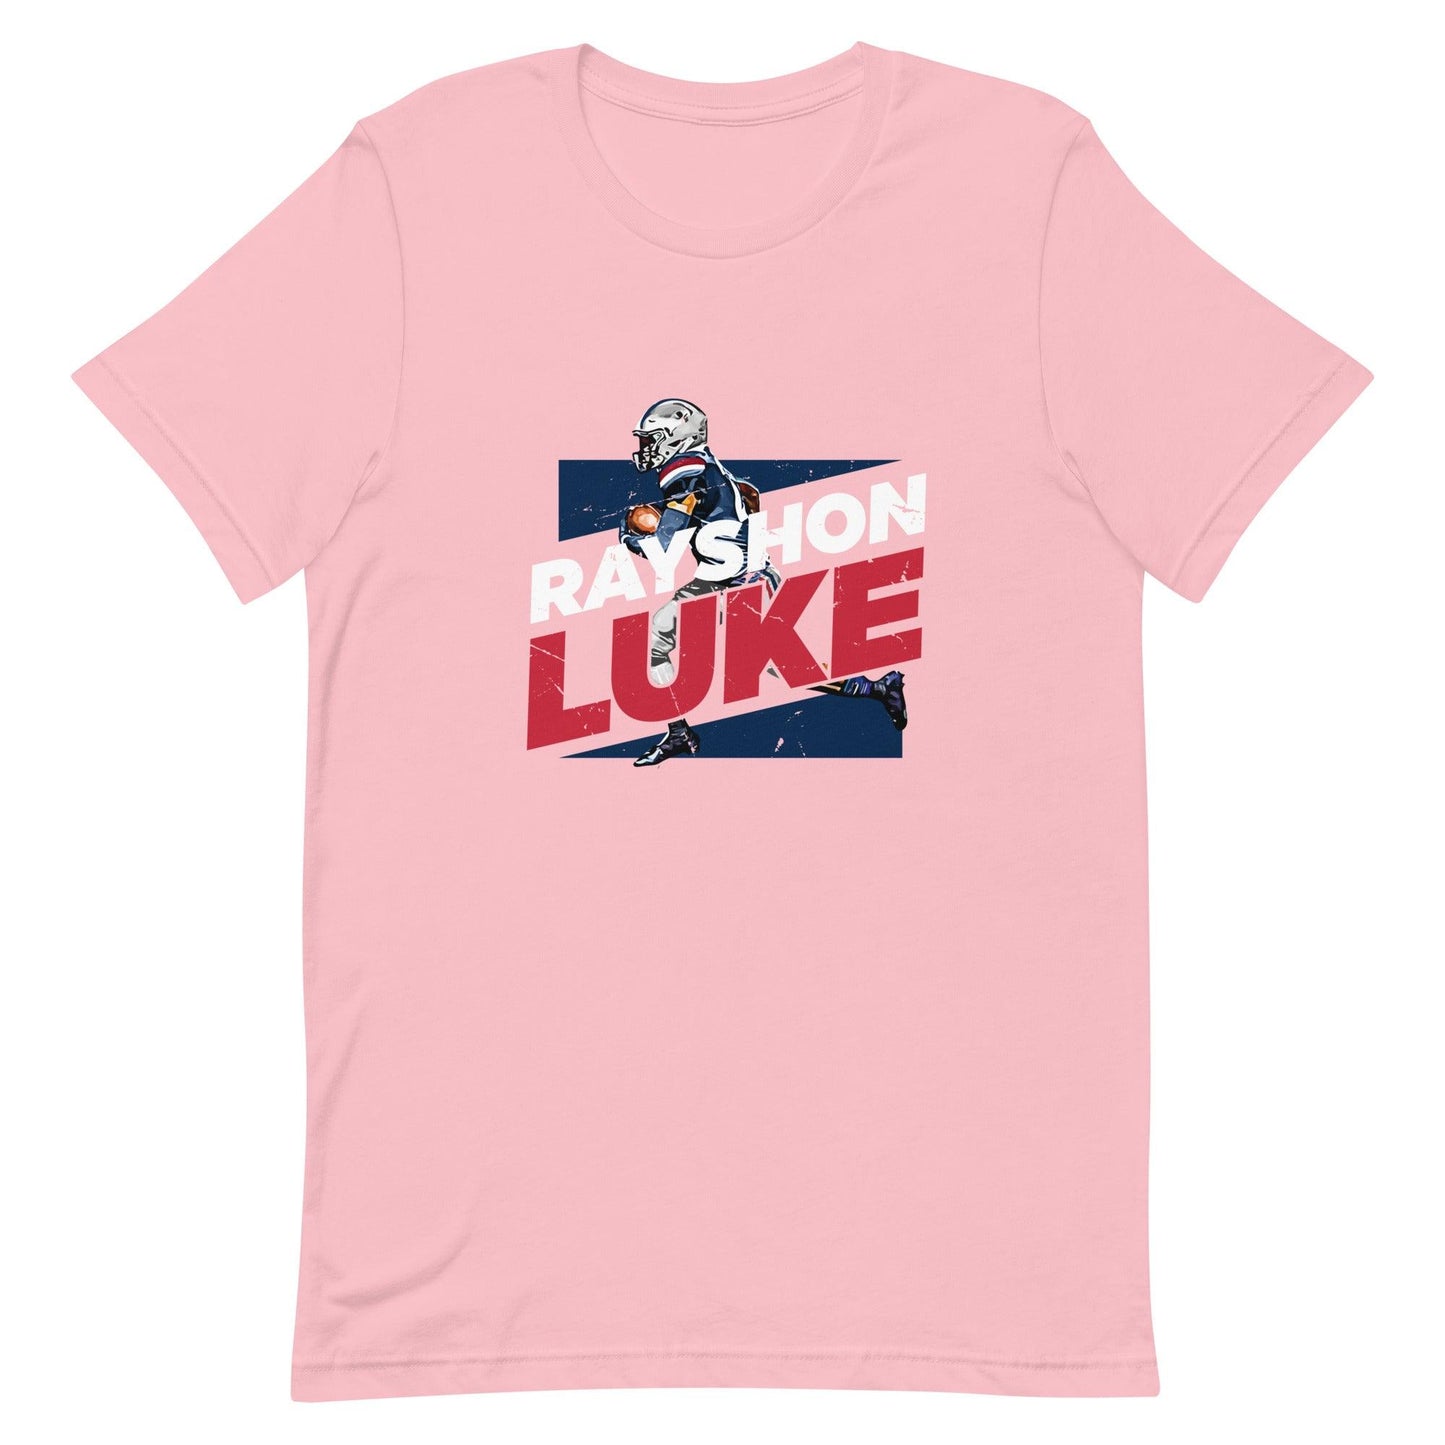 Rayshon Luke "Gametime" t-shirt - Fan Arch